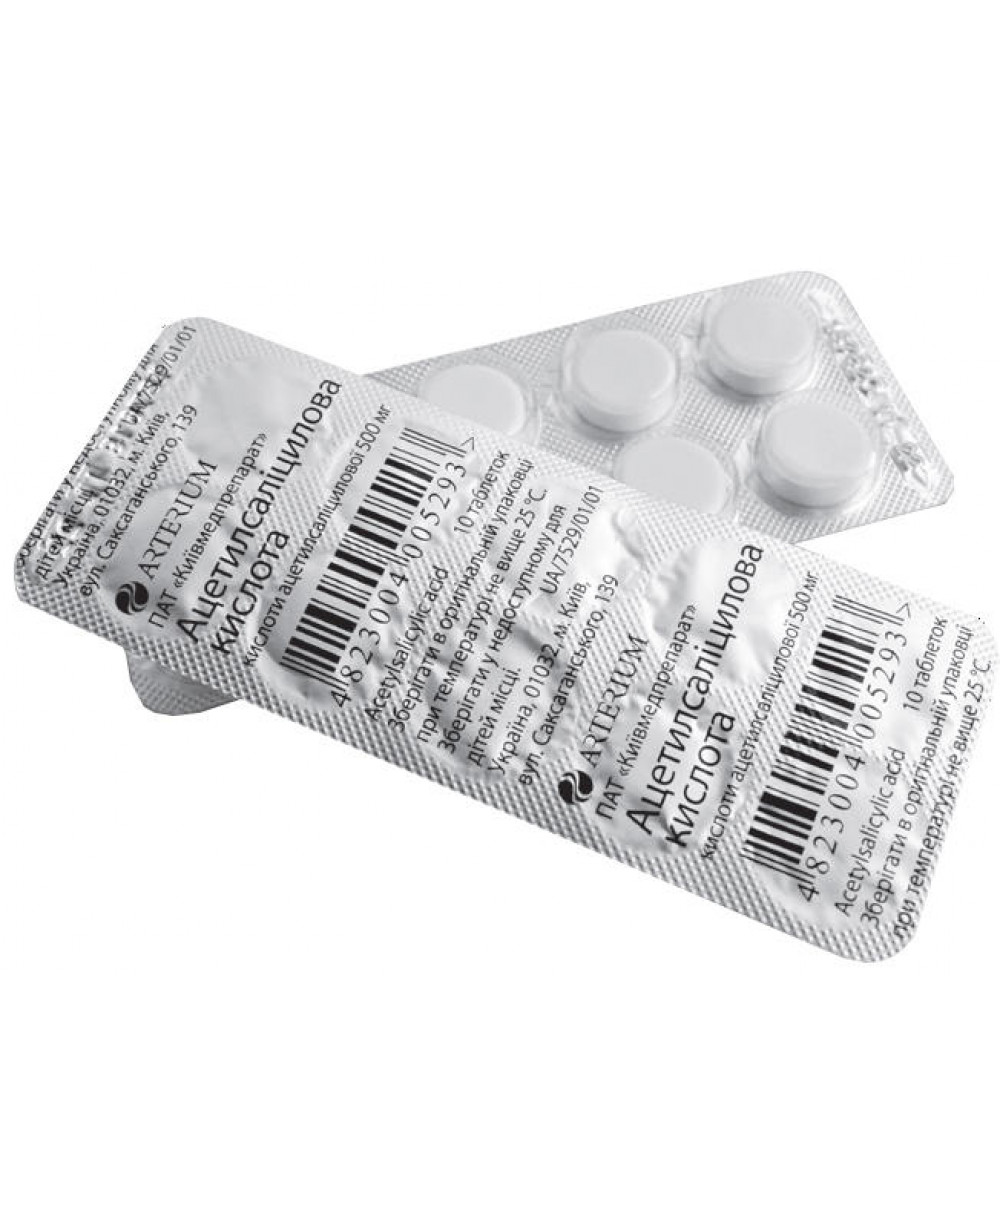 2744 БЛІМОЛ - Paracetamol